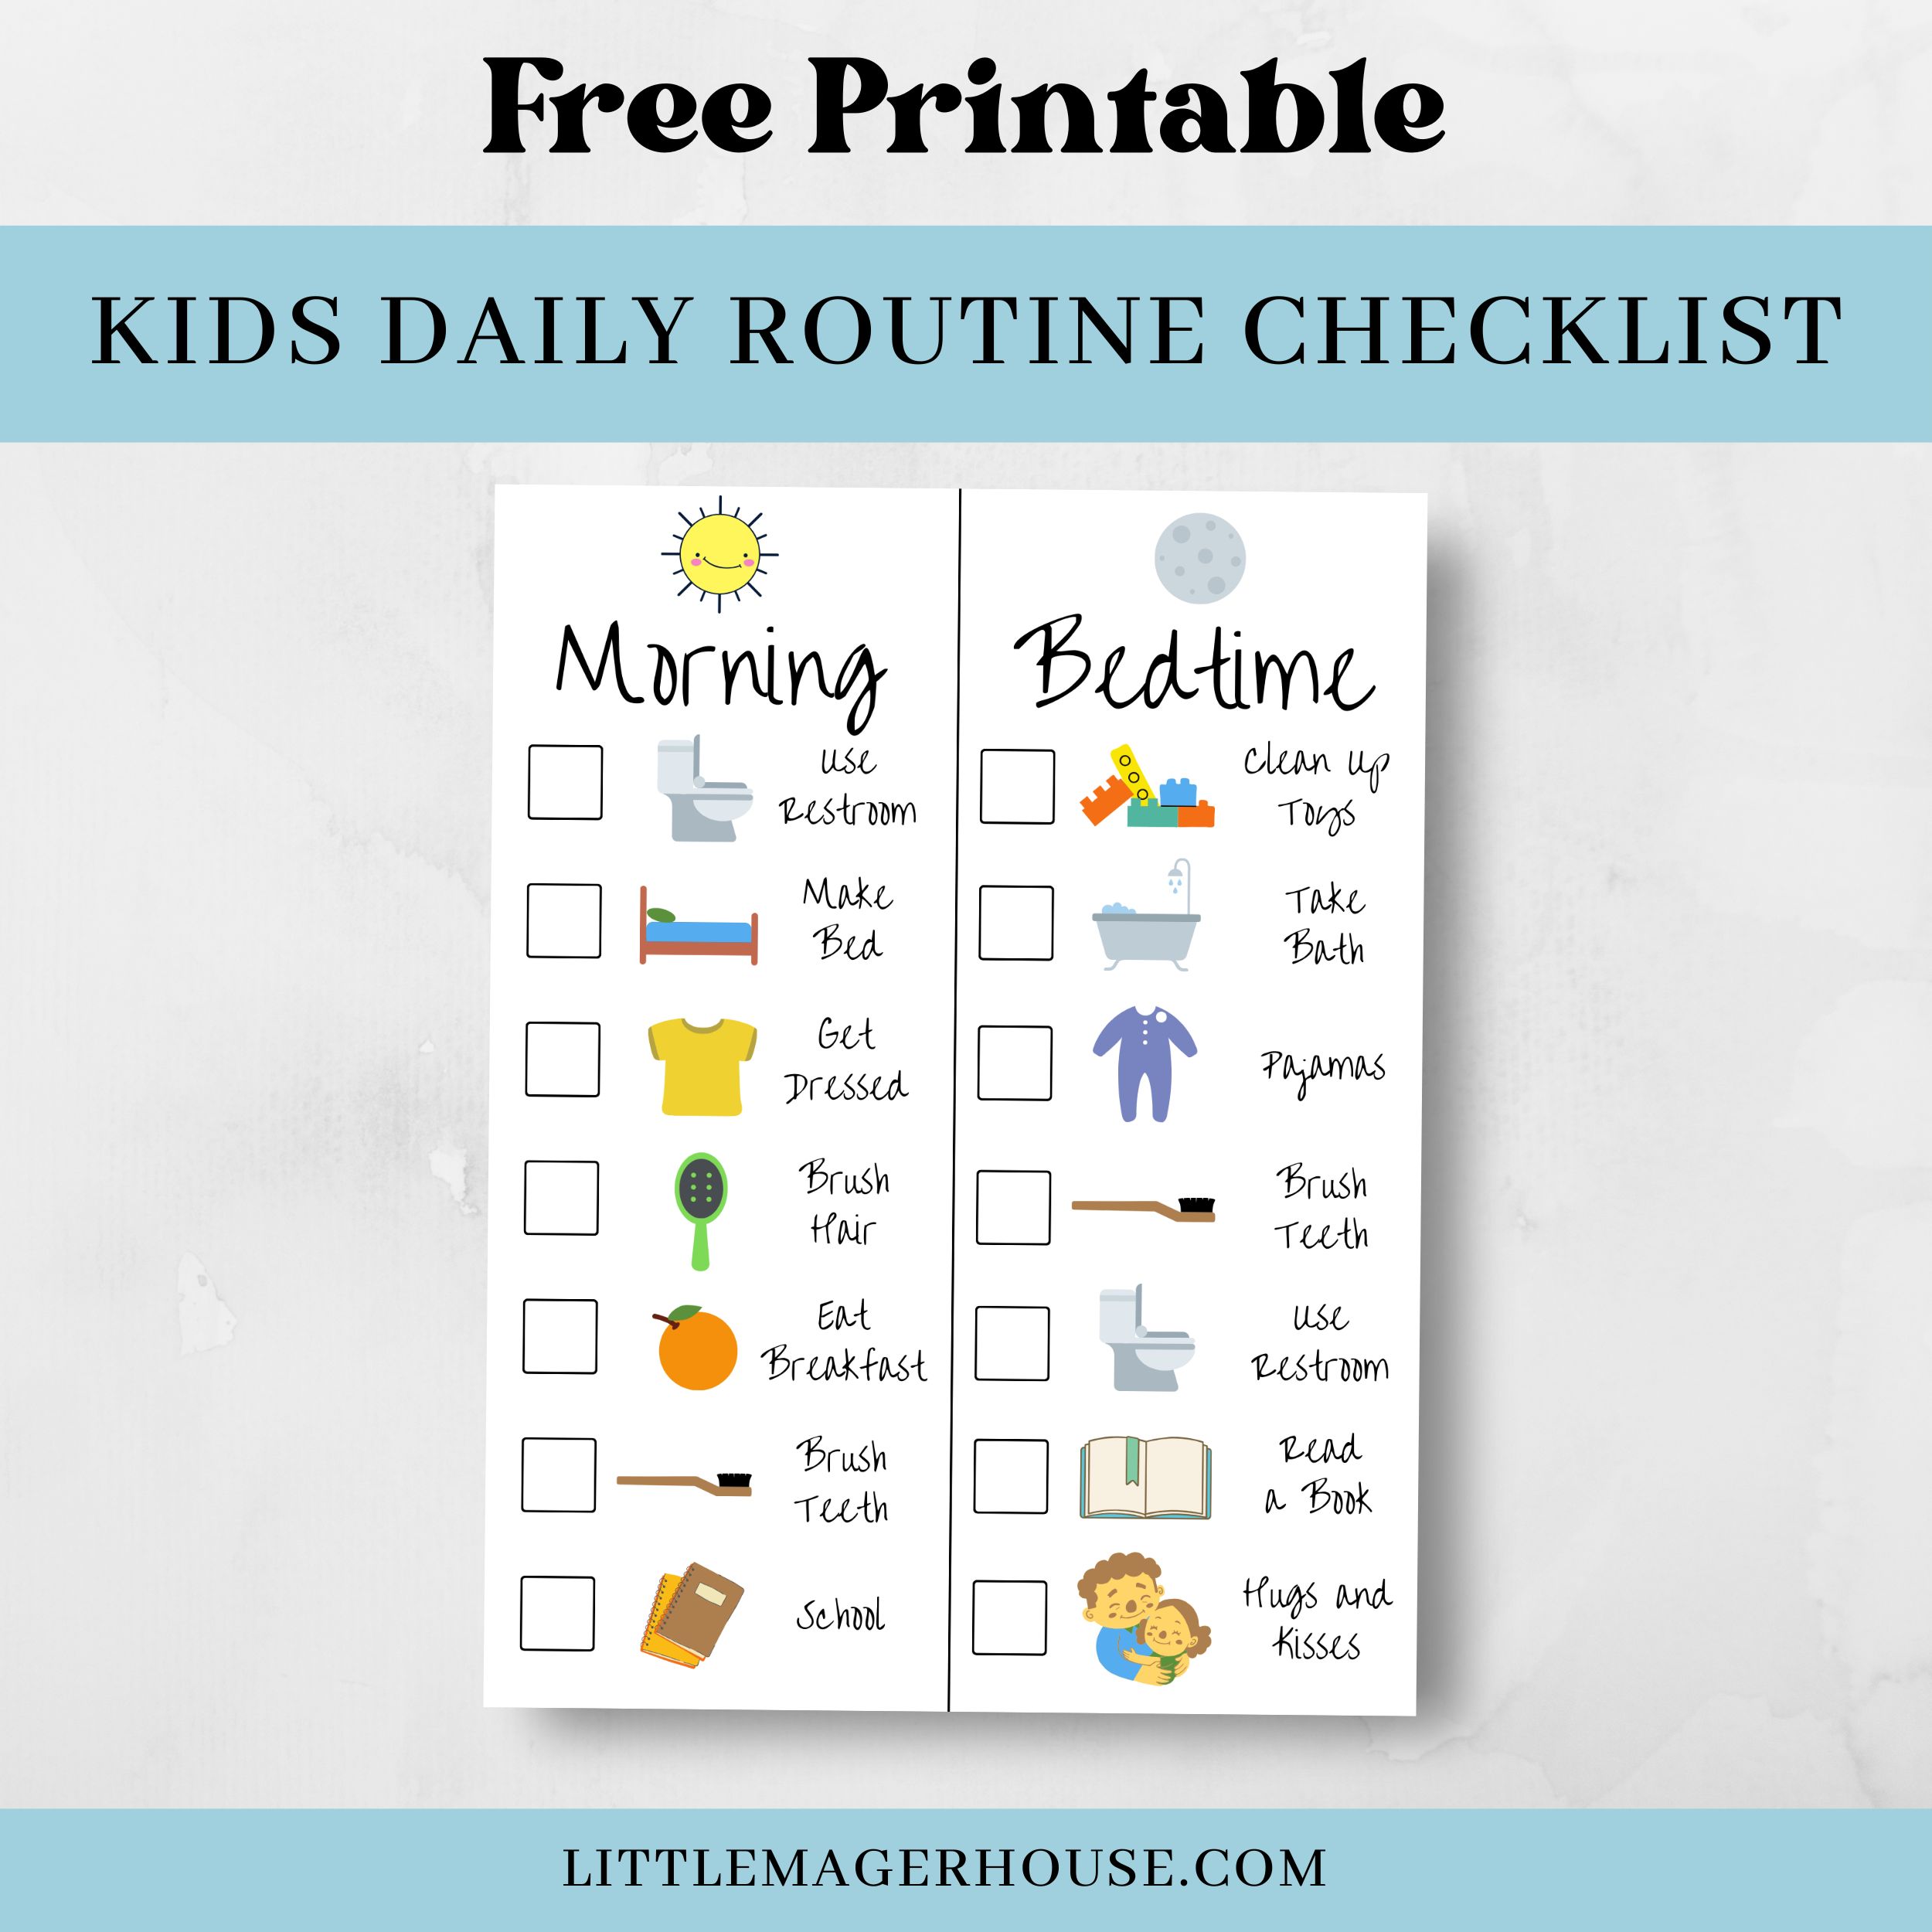 https://littlemagerhouse.com/wp-content/uploads/2020/07/Free-Printable-Kids-Daily-Routine-Checklist.jpg